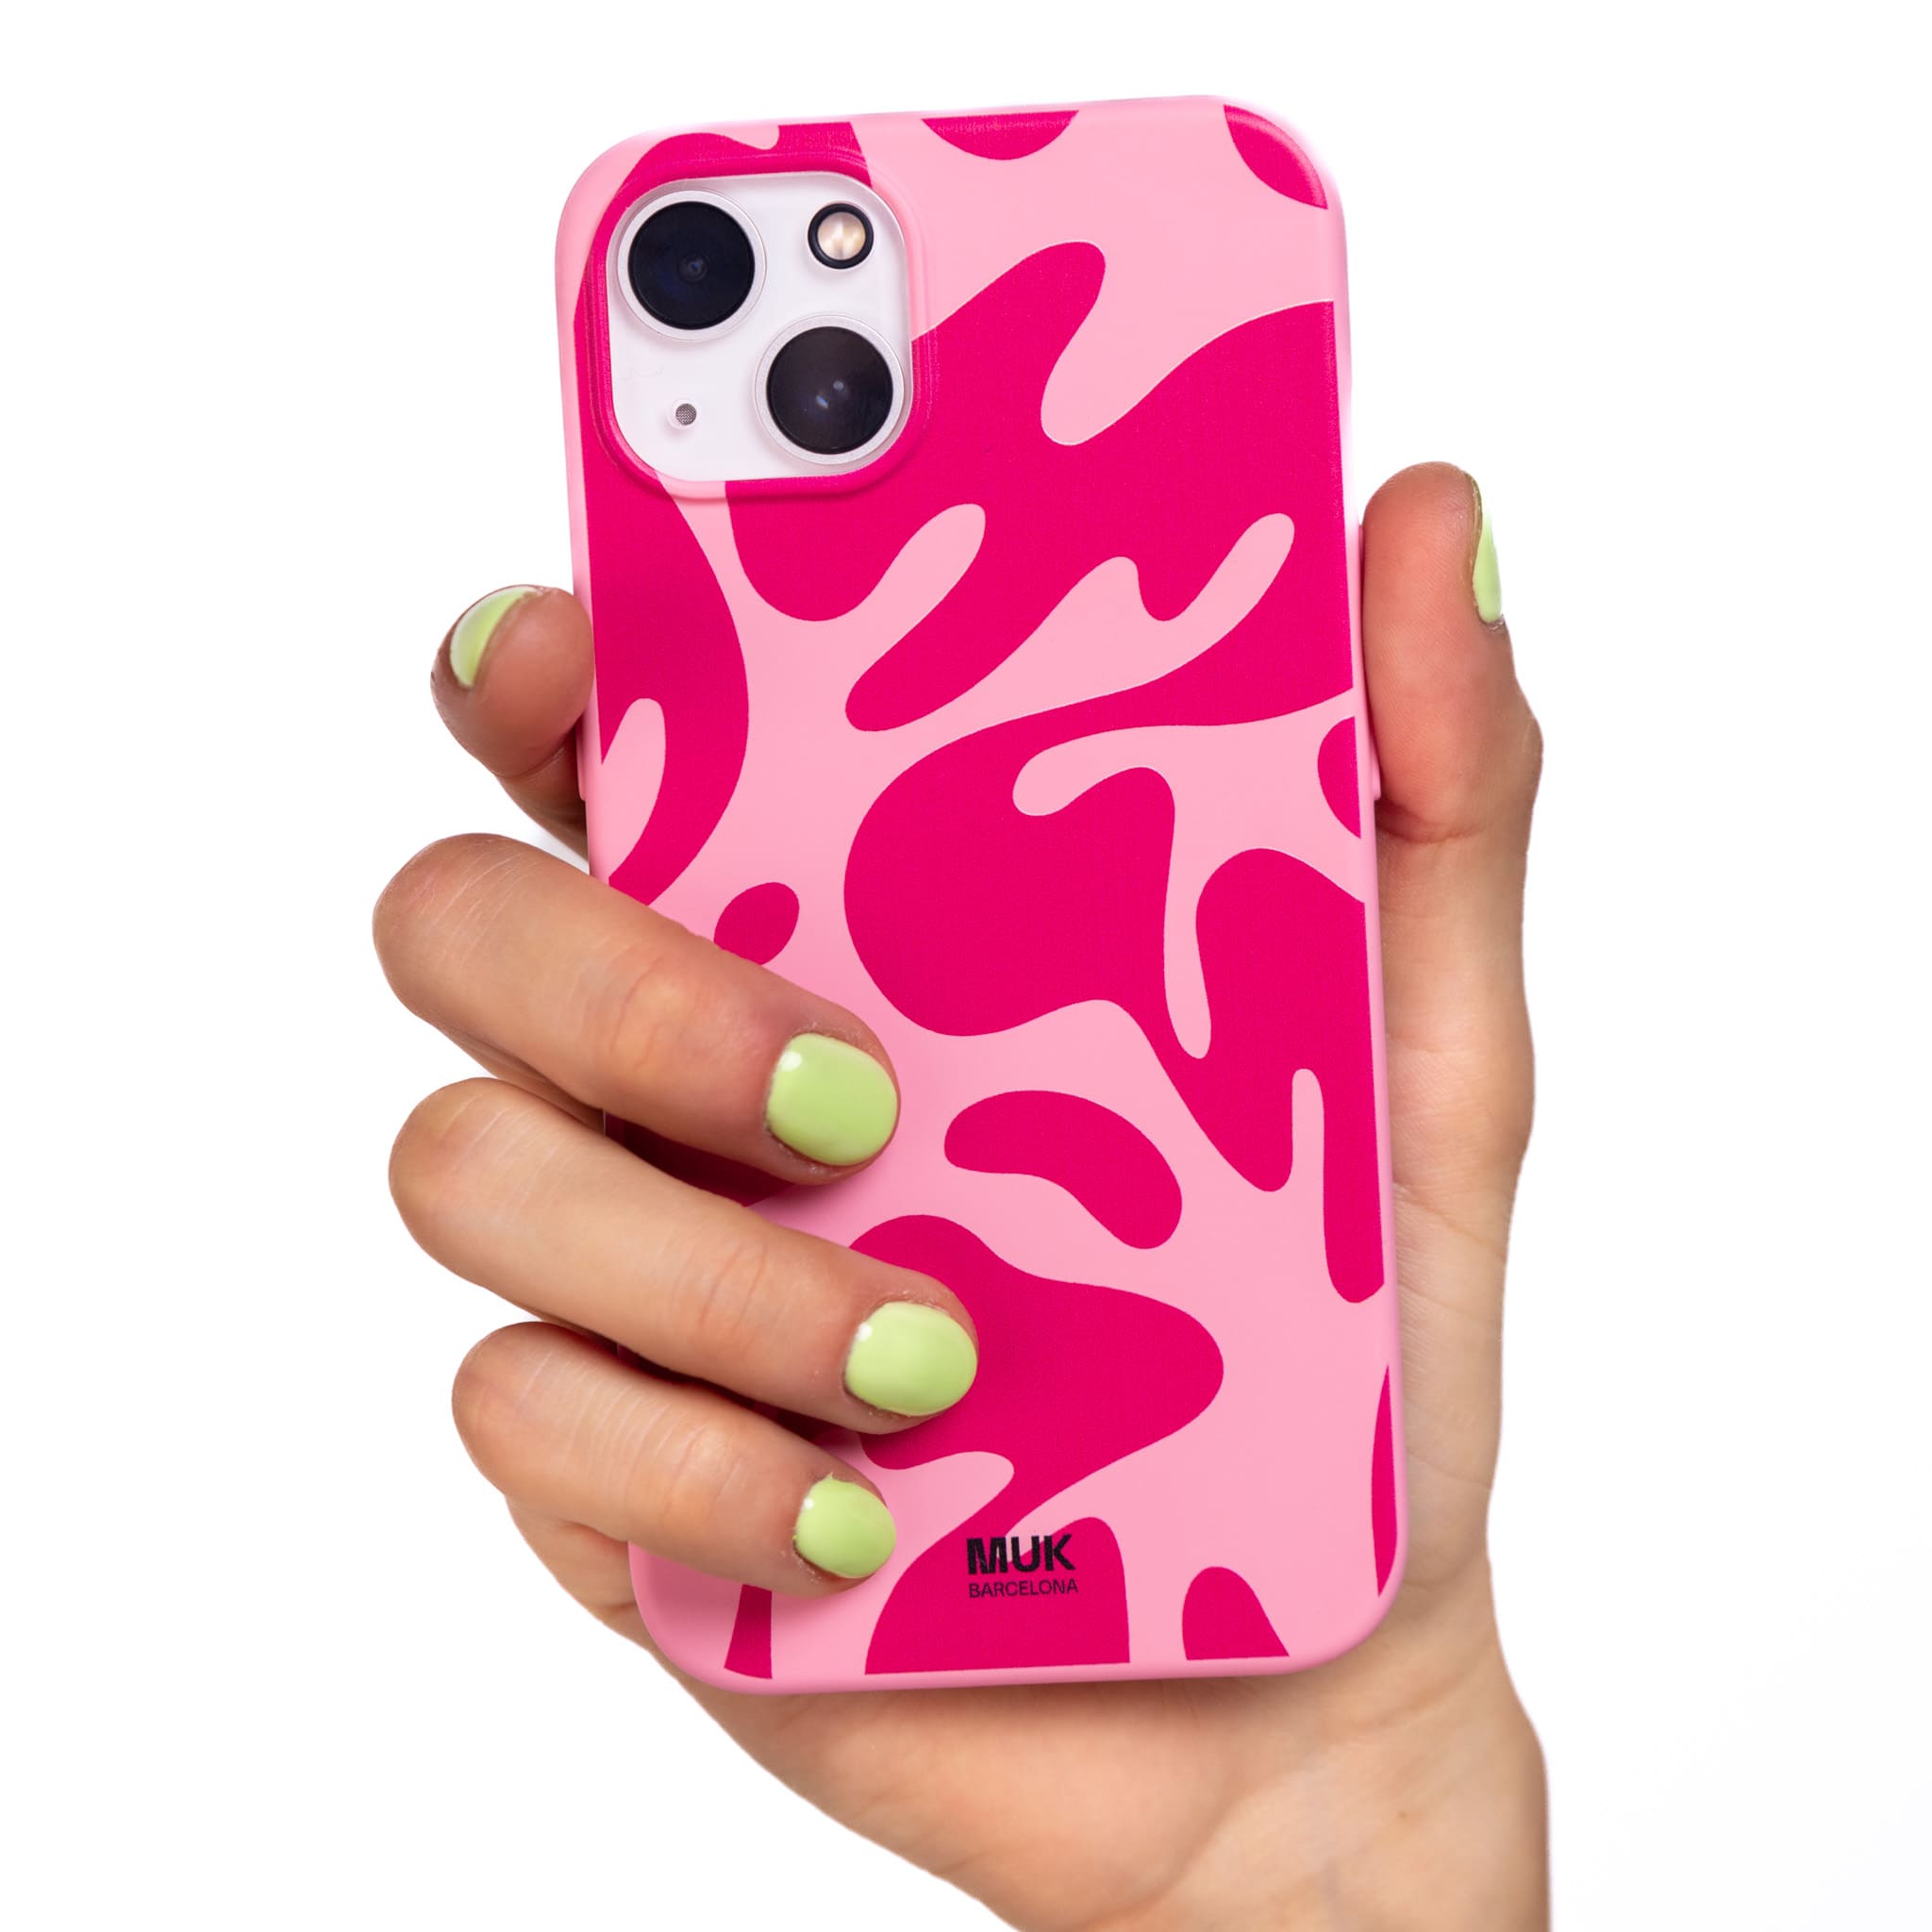  Pink TPU mobile case with irregular print.
